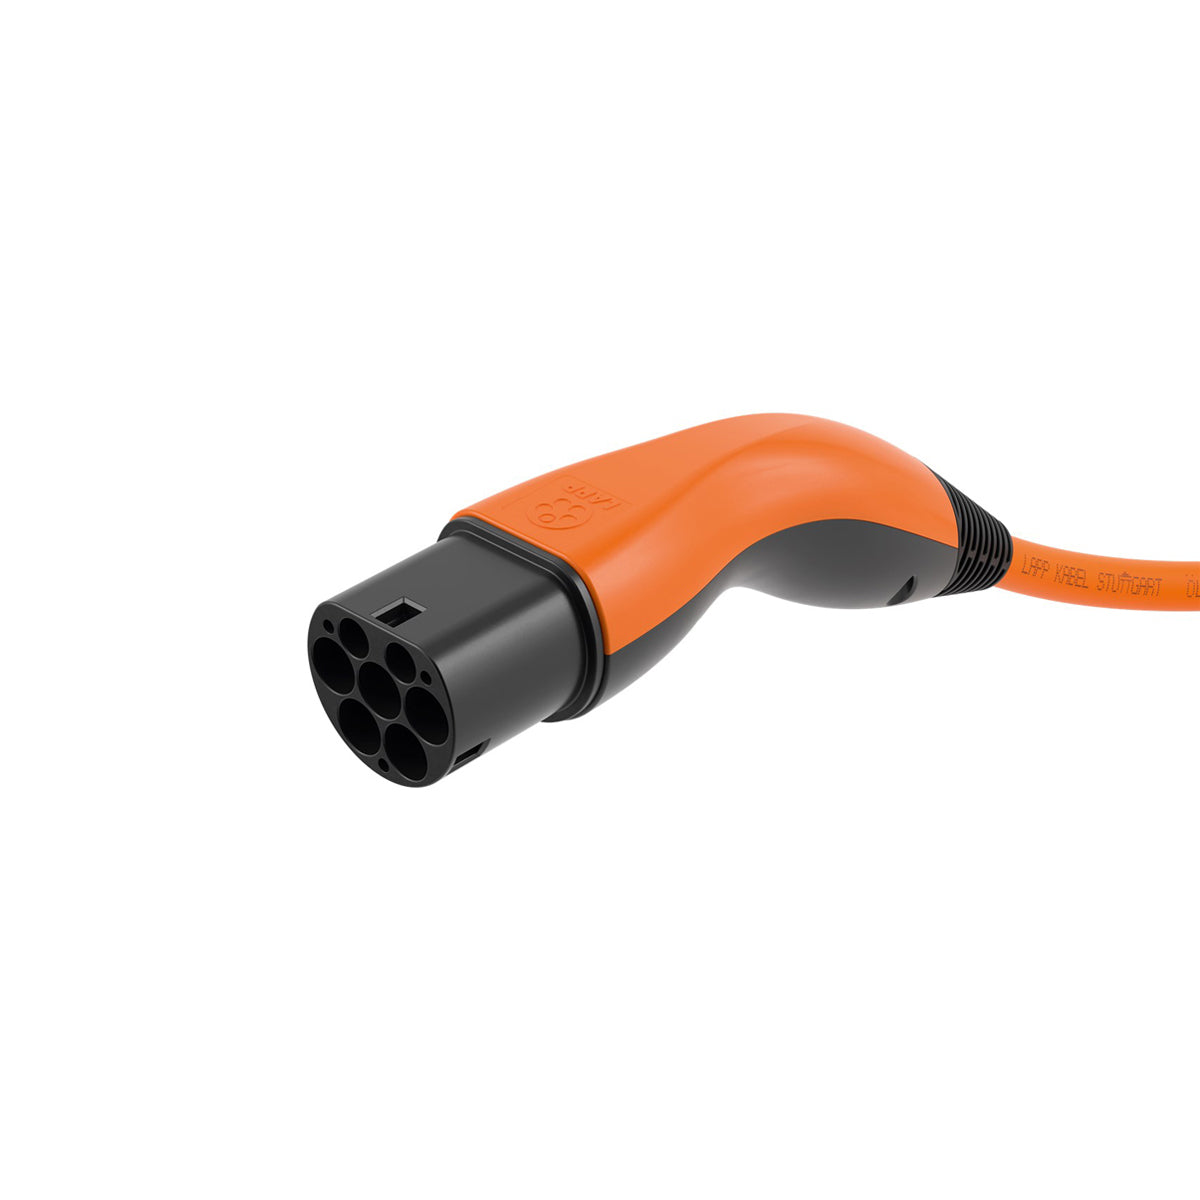 LAPP EV Charge Cable Type 2 (11kW-3P-20A) 5m - Orange.